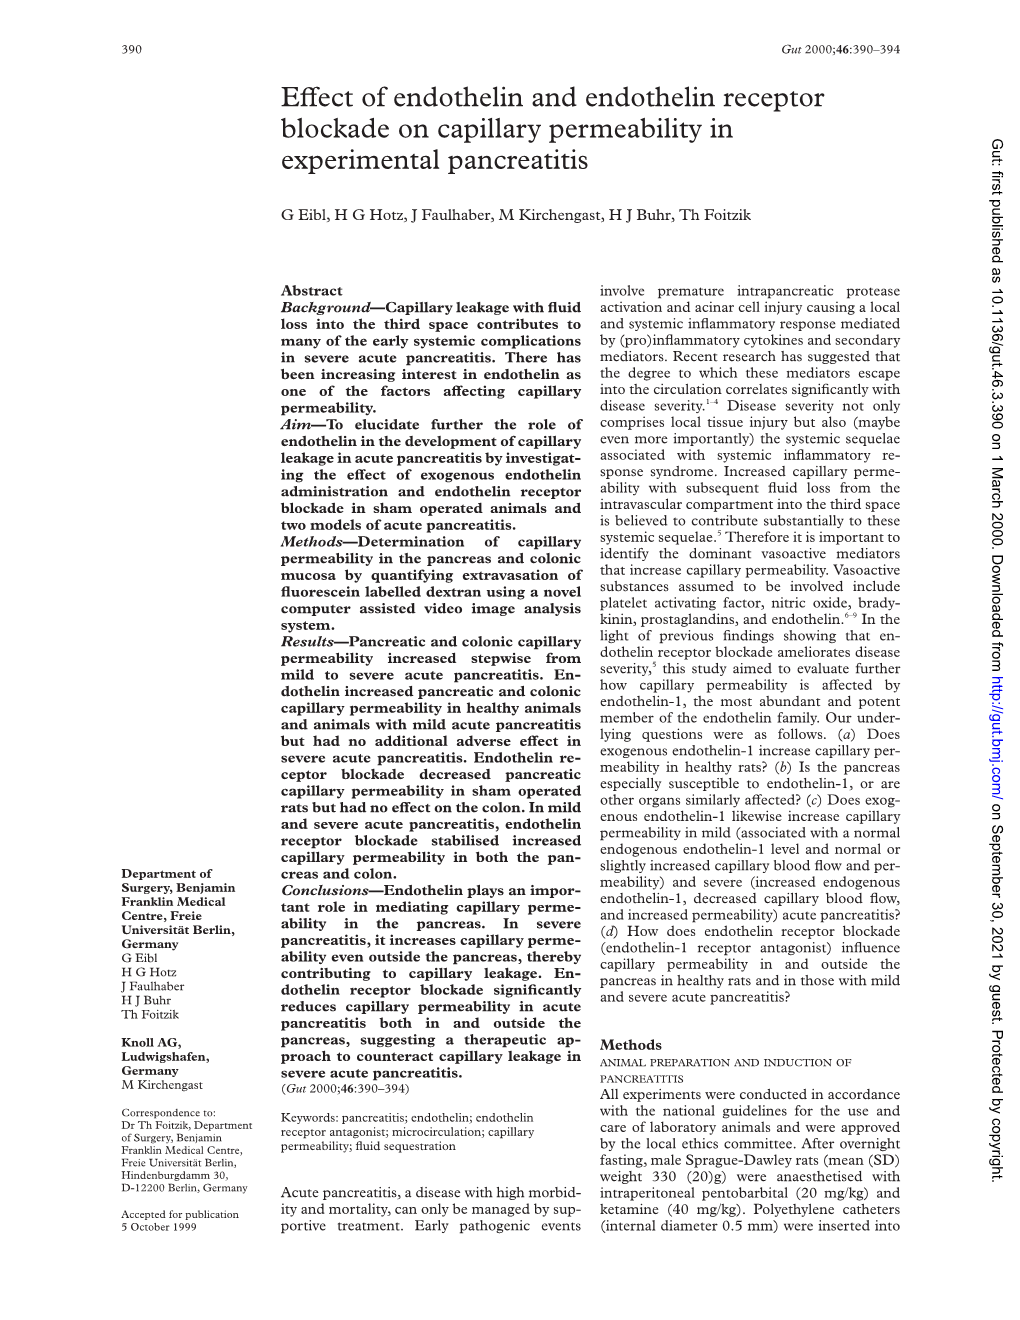 Evect of Endothelin and Endothelin Receptor Blockade on Capillary Permeability in Experimental Pancreatitis